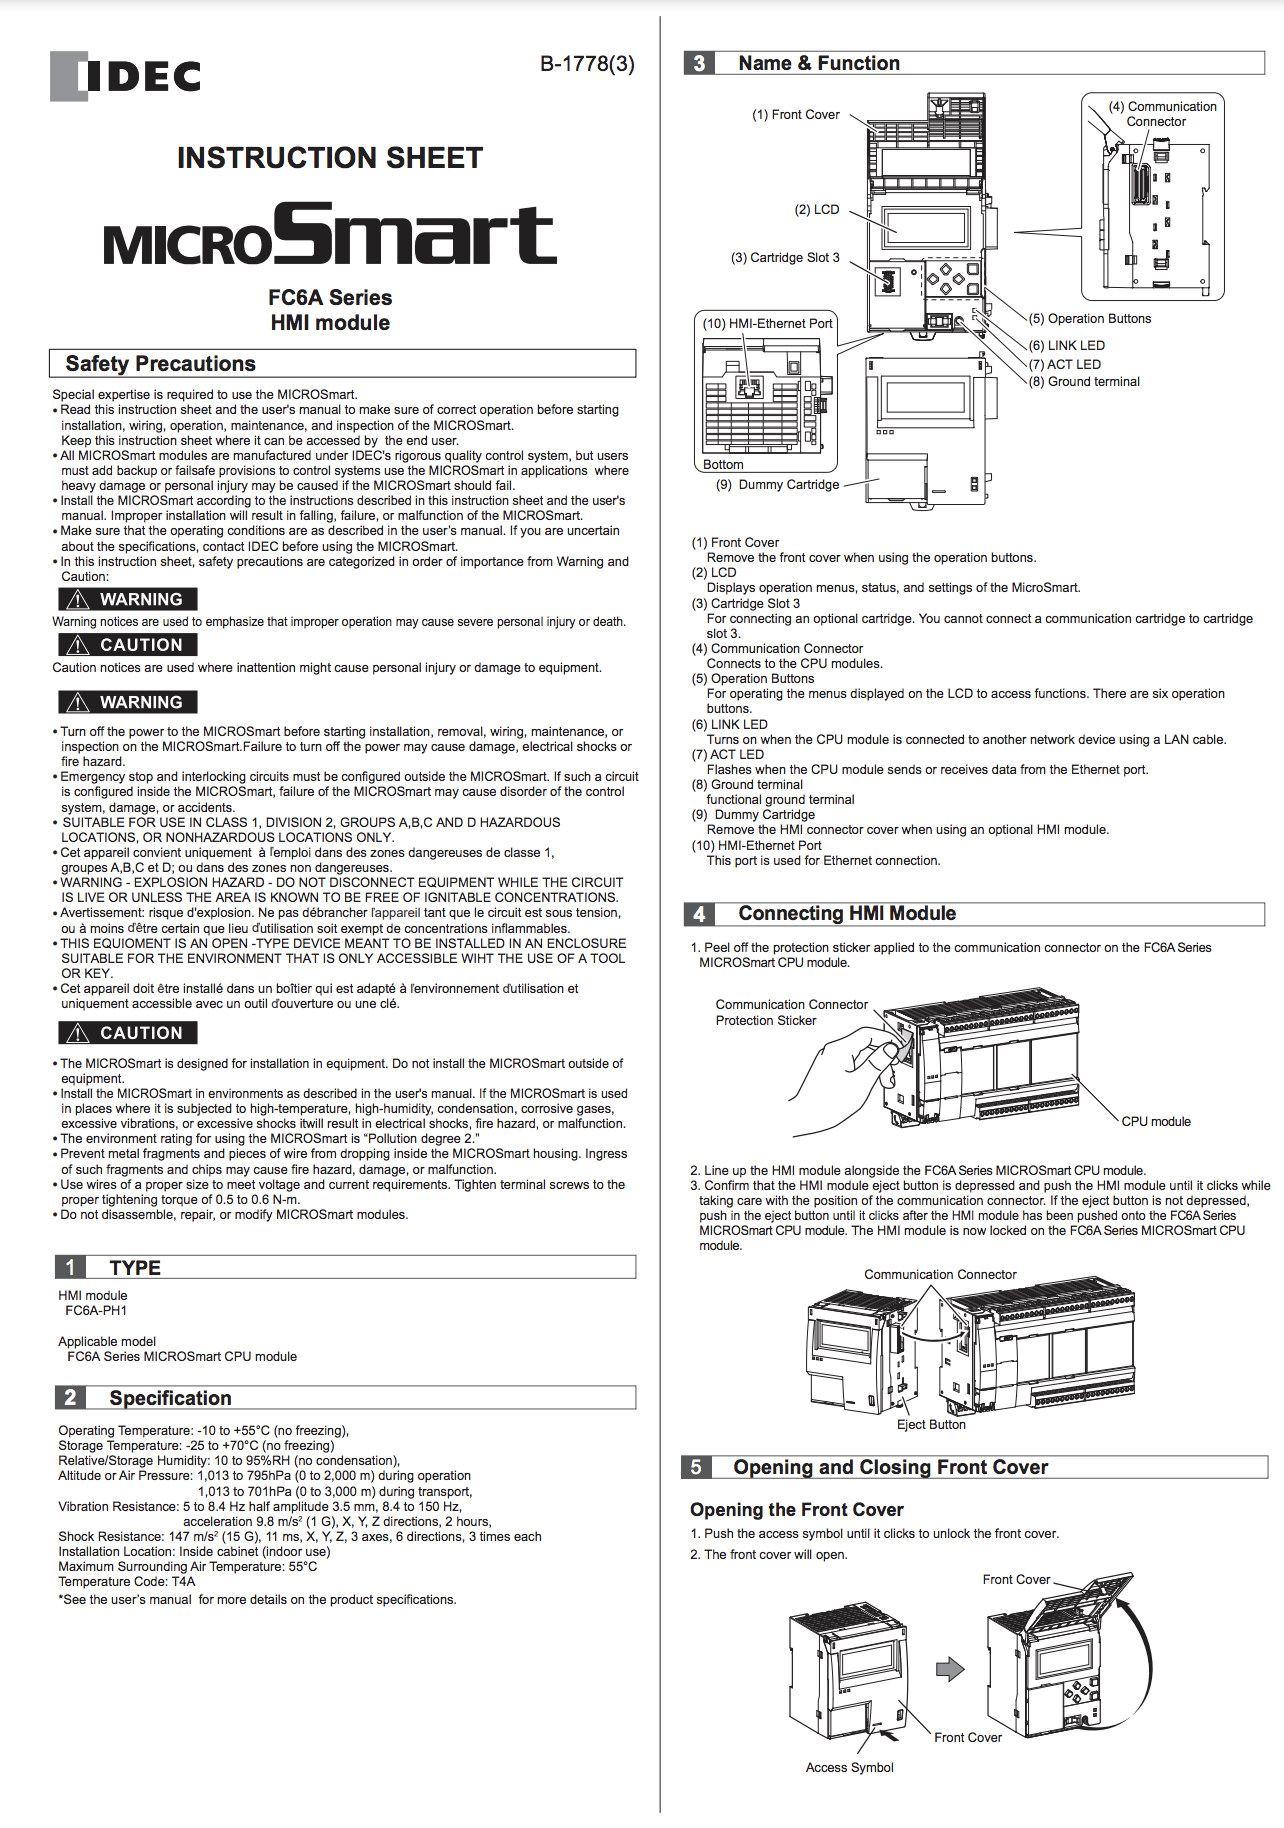 IDEC FC6A MICROSmart HMI module Instruction Sheet